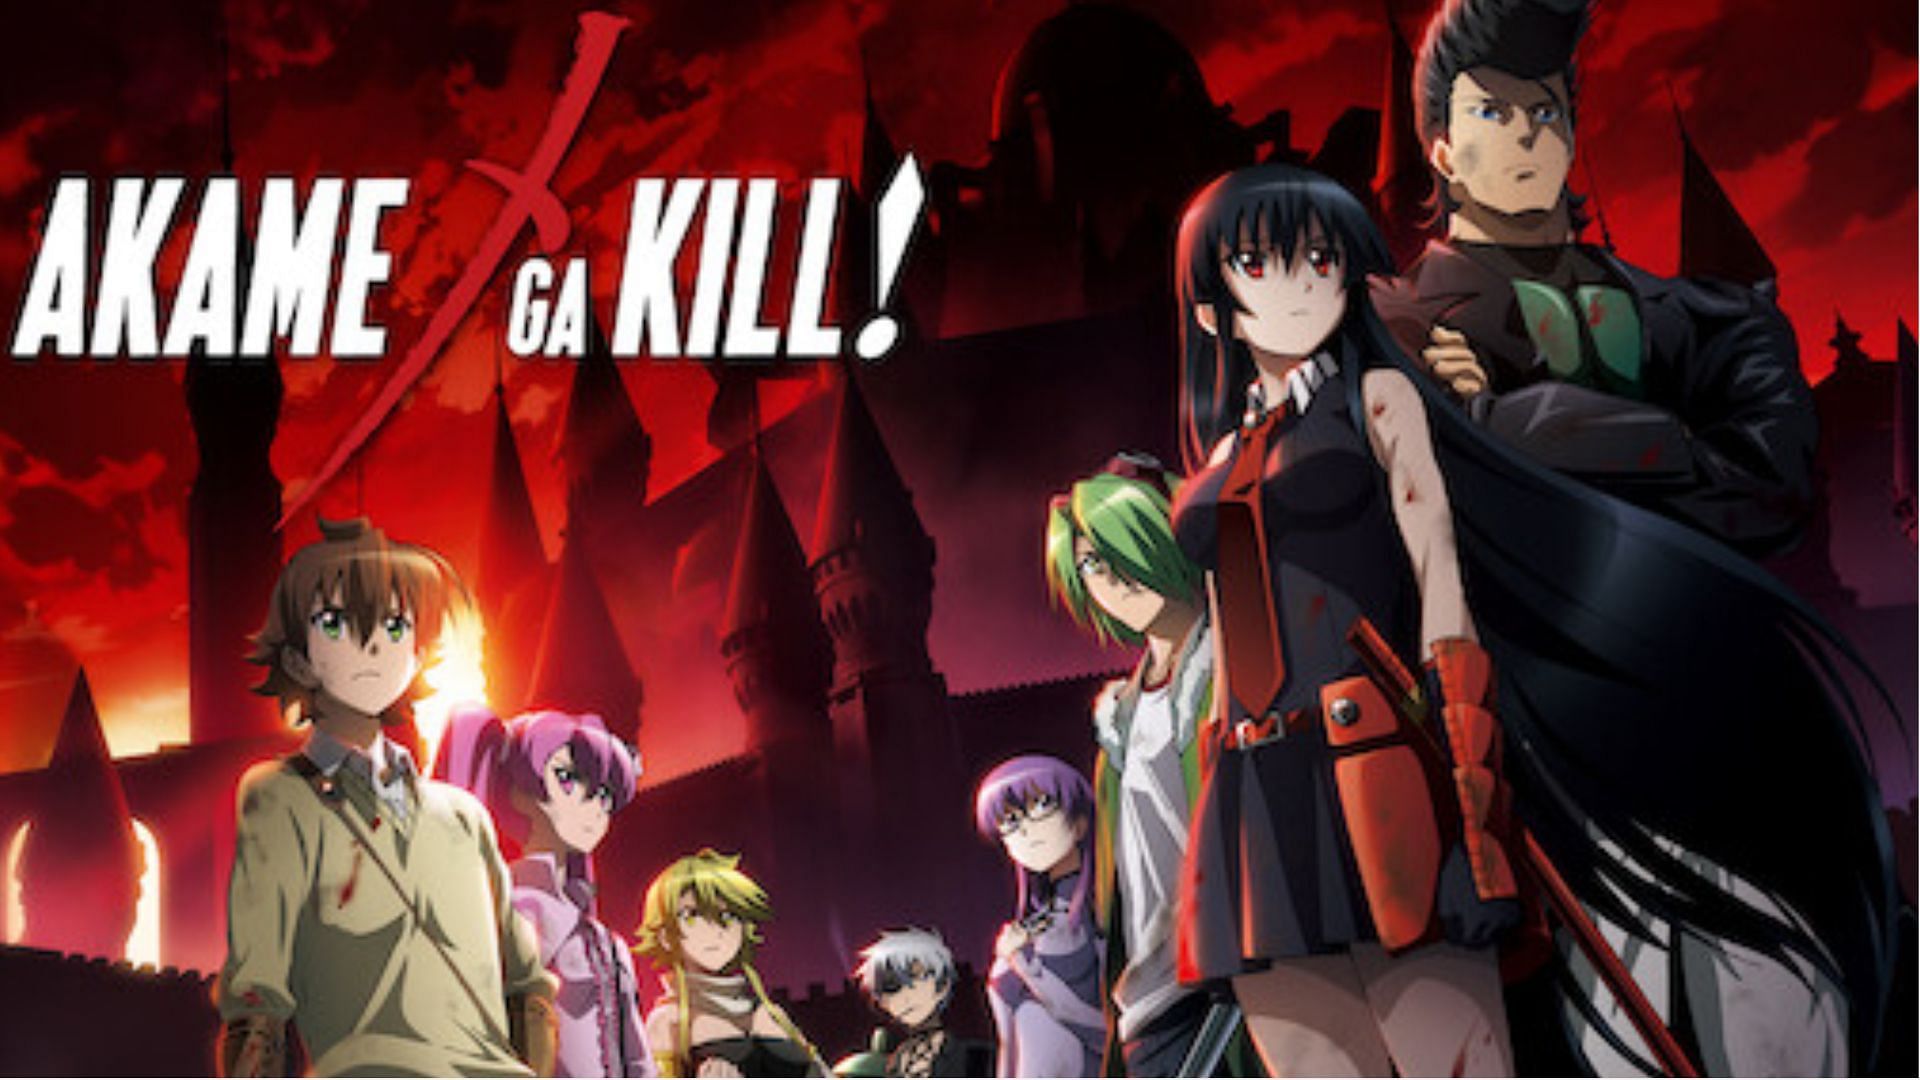 Official poster of Akame Ga Kill! (Image credits: Takahiro/ Tetsuya Tashiro/ Square Enix/ White Fox)